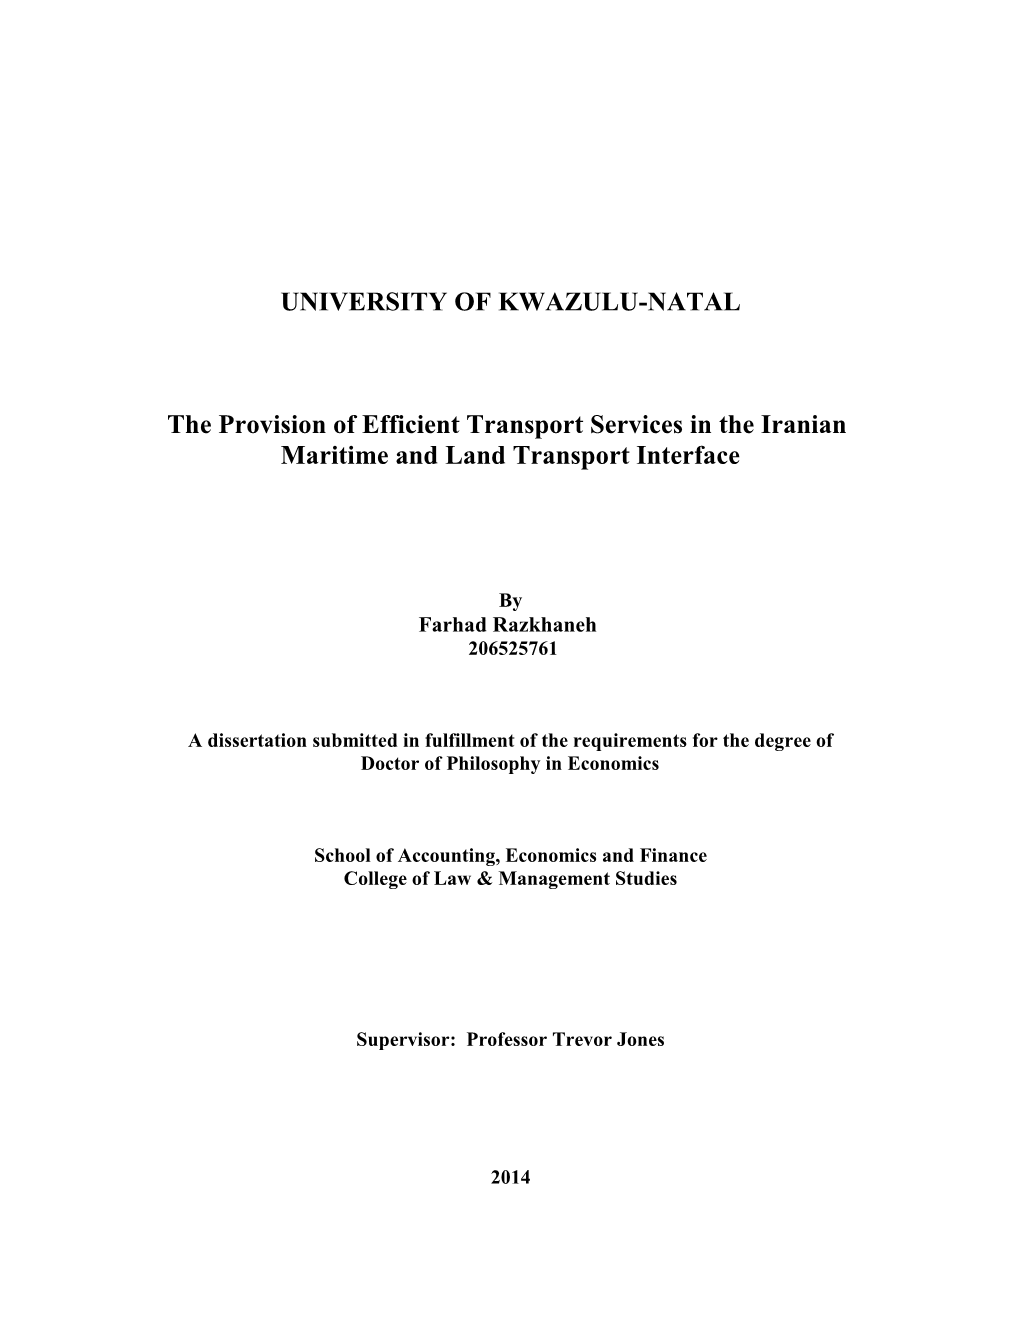 UNIVERSITY of KWAZULU-NATAL the Provision of Efficient Transport